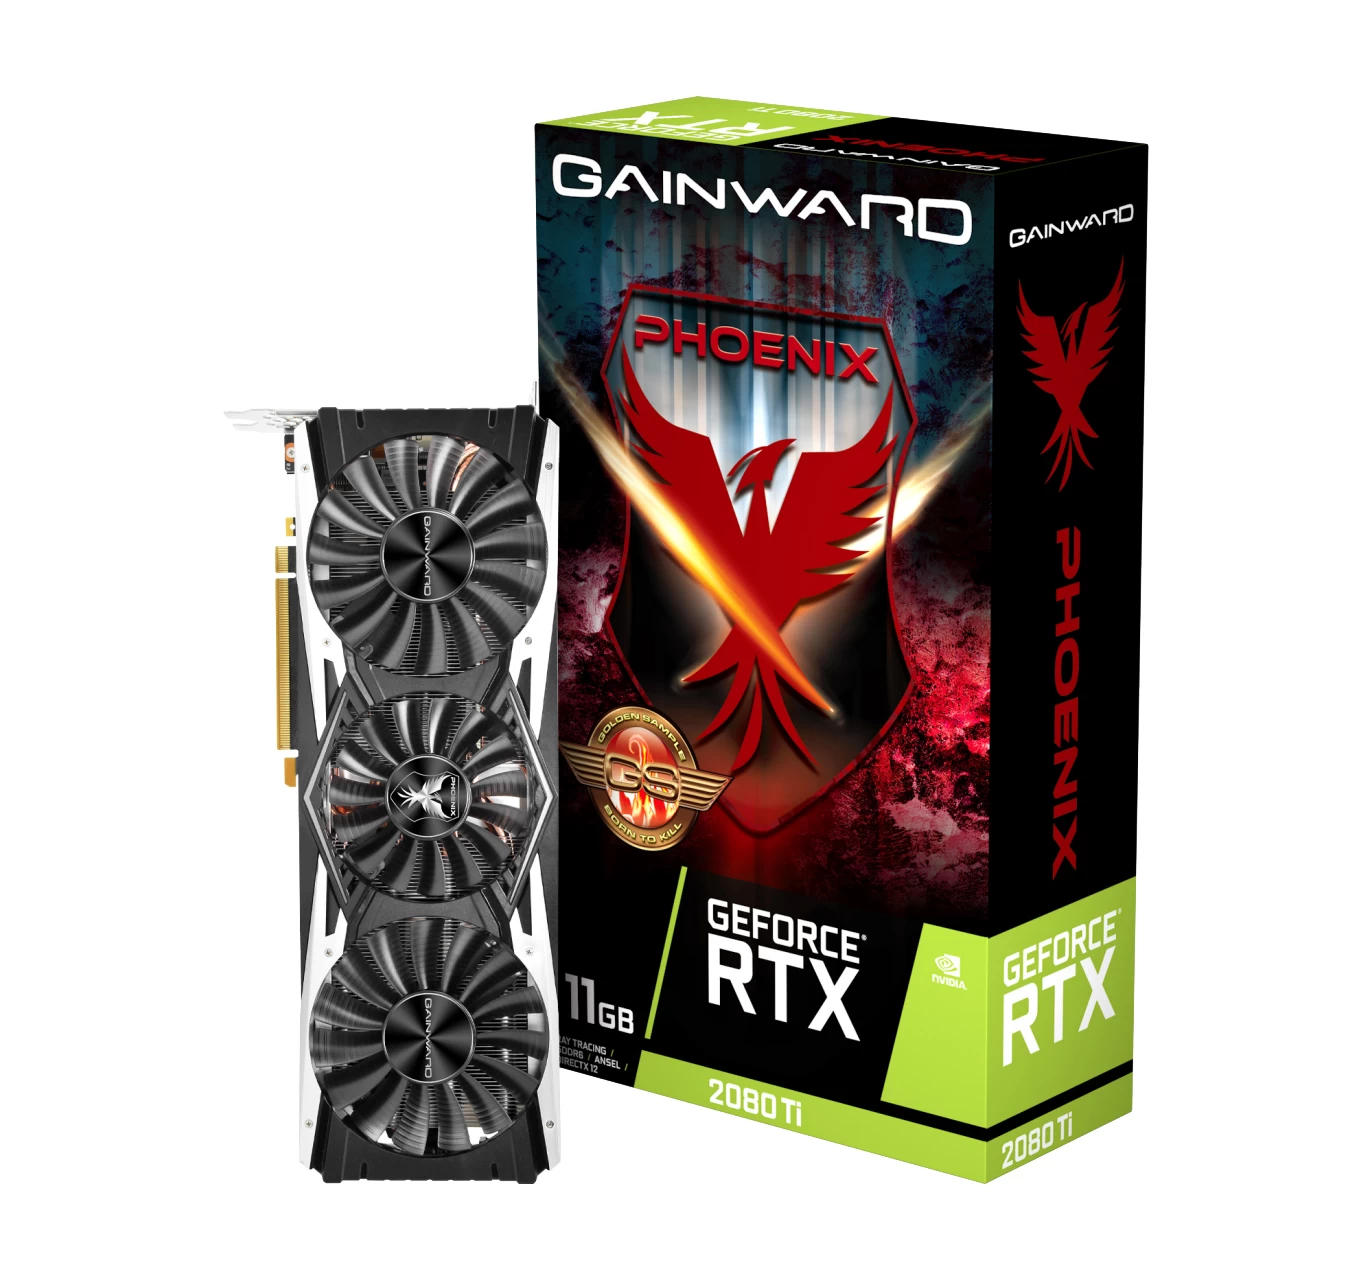 Gainward GeForce RTX 2080 Ti Phoenix GS Package